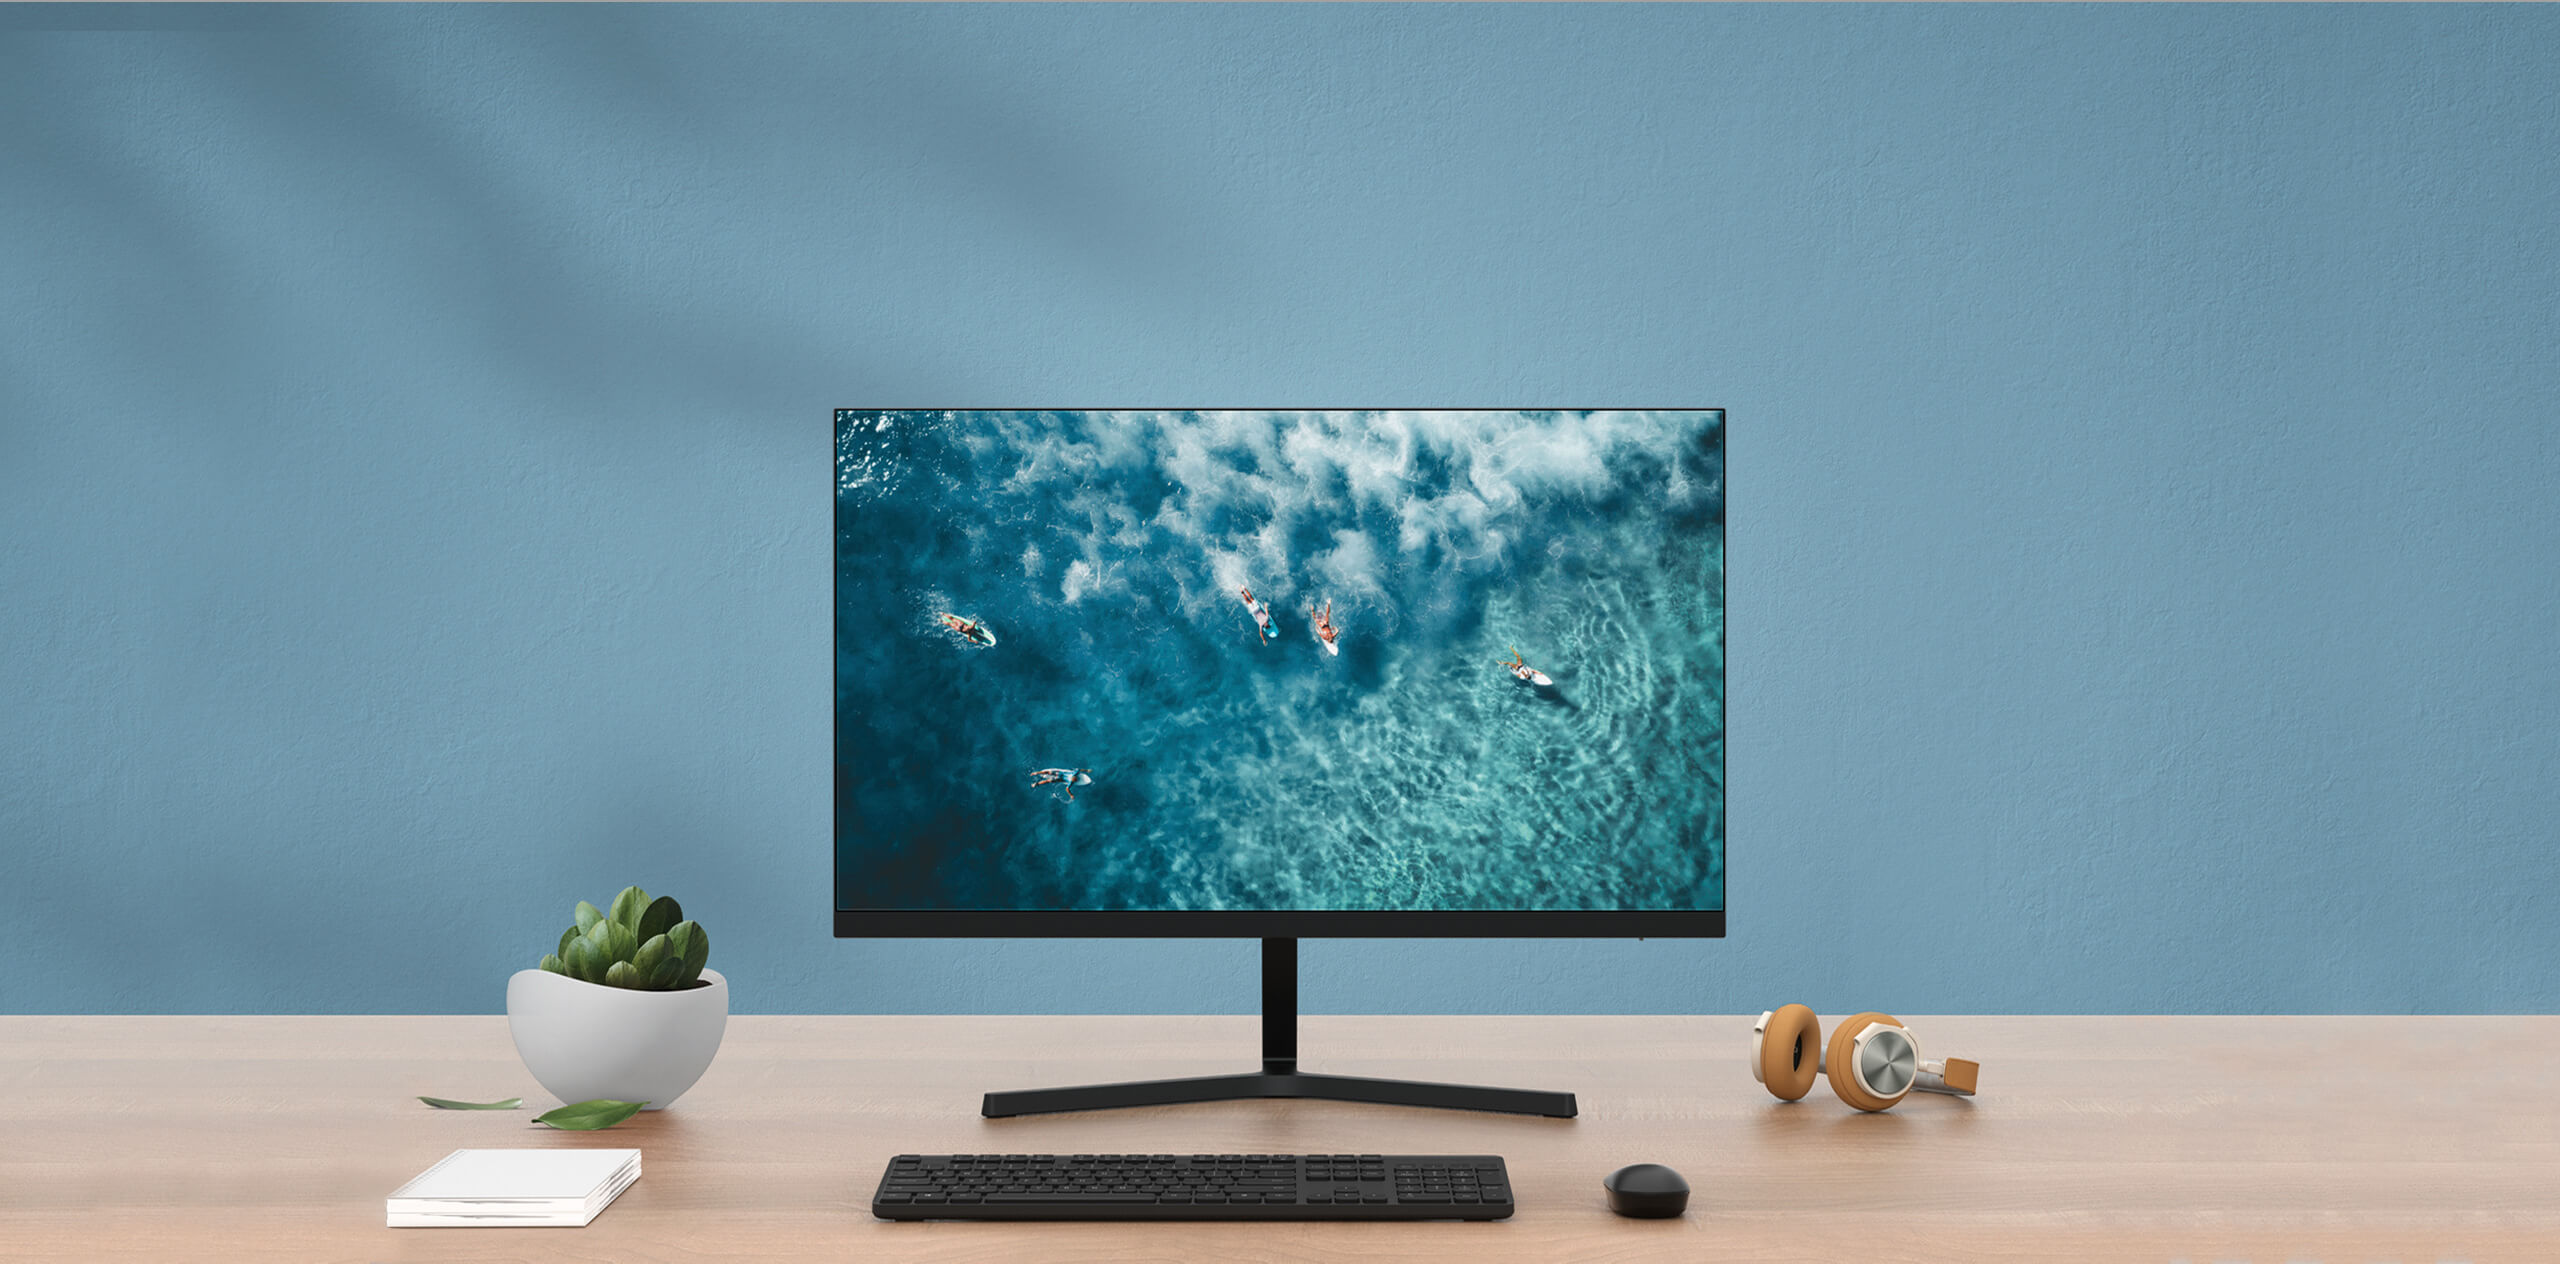 AliExpress comenzó a vender Redmi Display 1A: un monitor delgado con una pantalla IPS de 23,8 pulgadas por $ 145